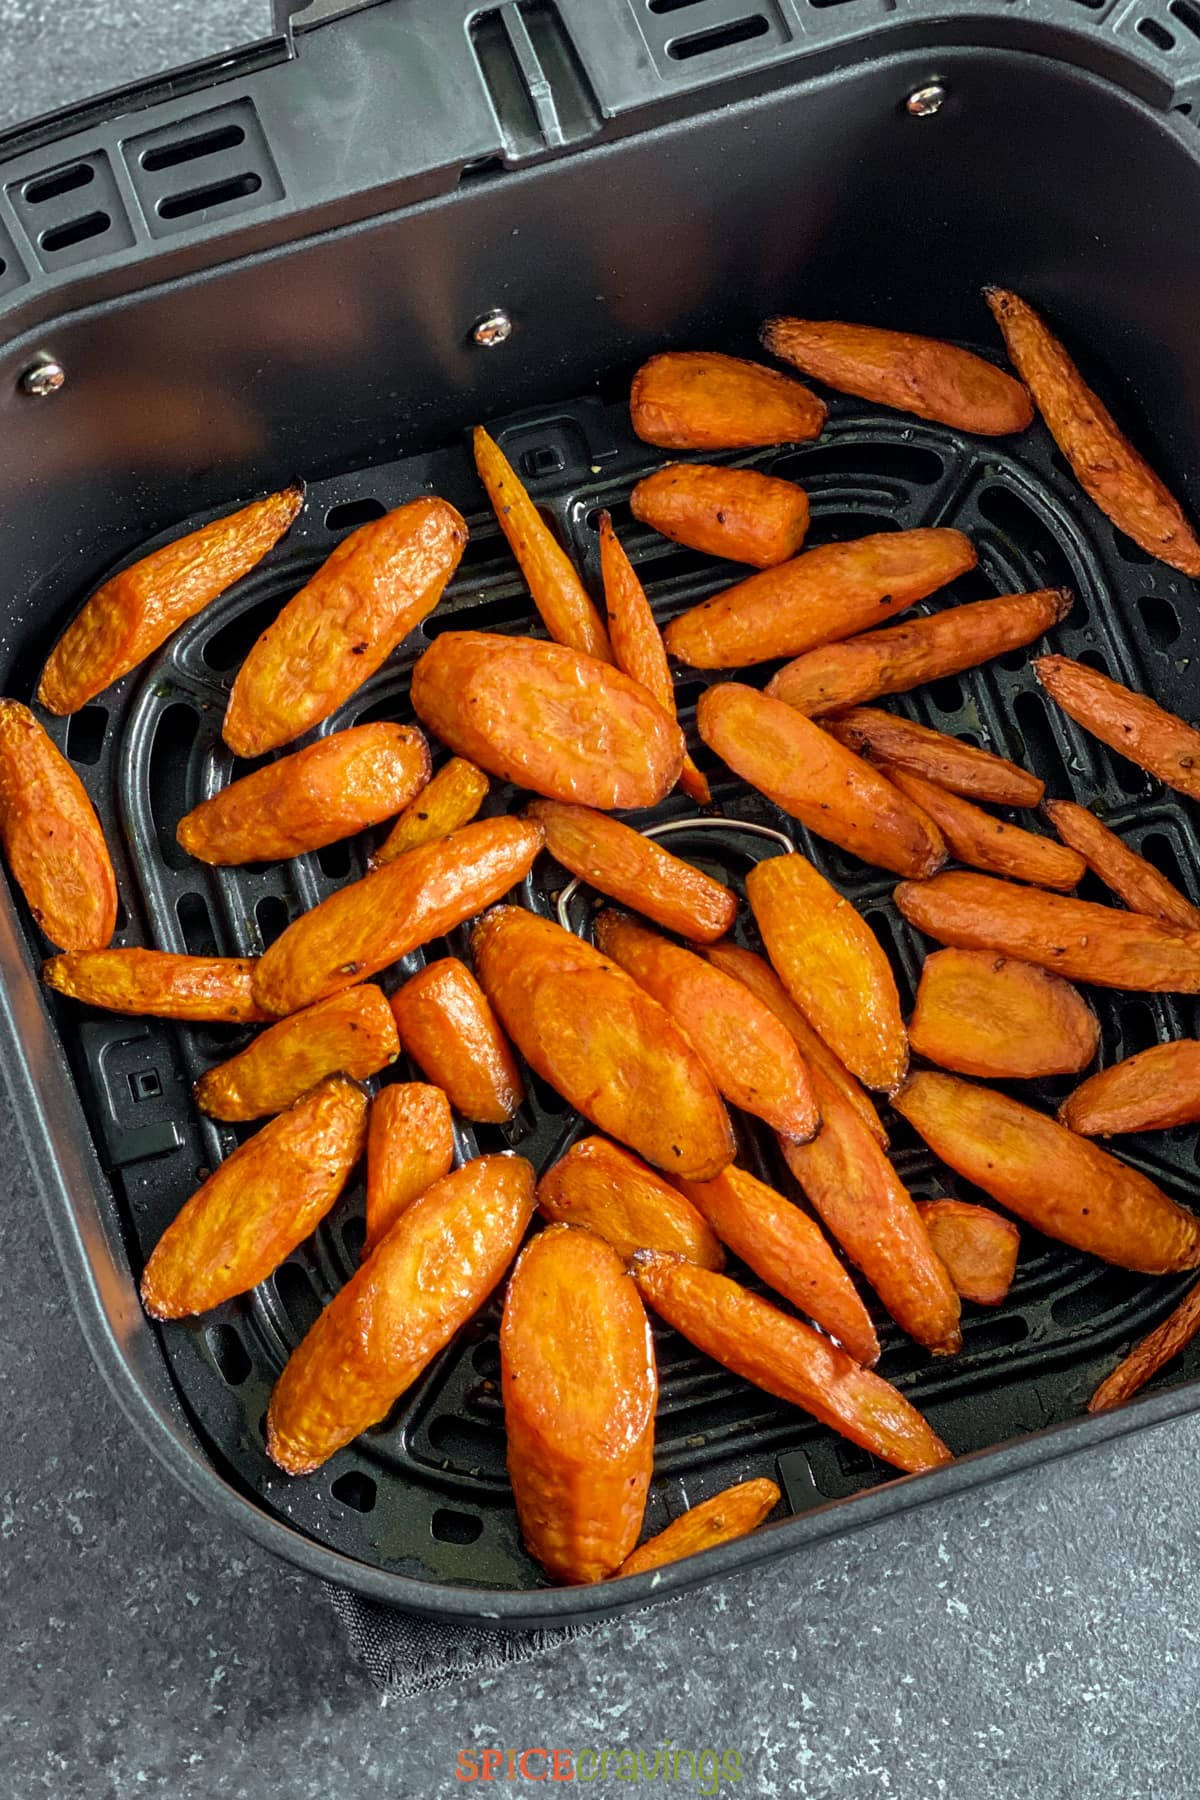 Roasted sliced carrots in air fryer basket